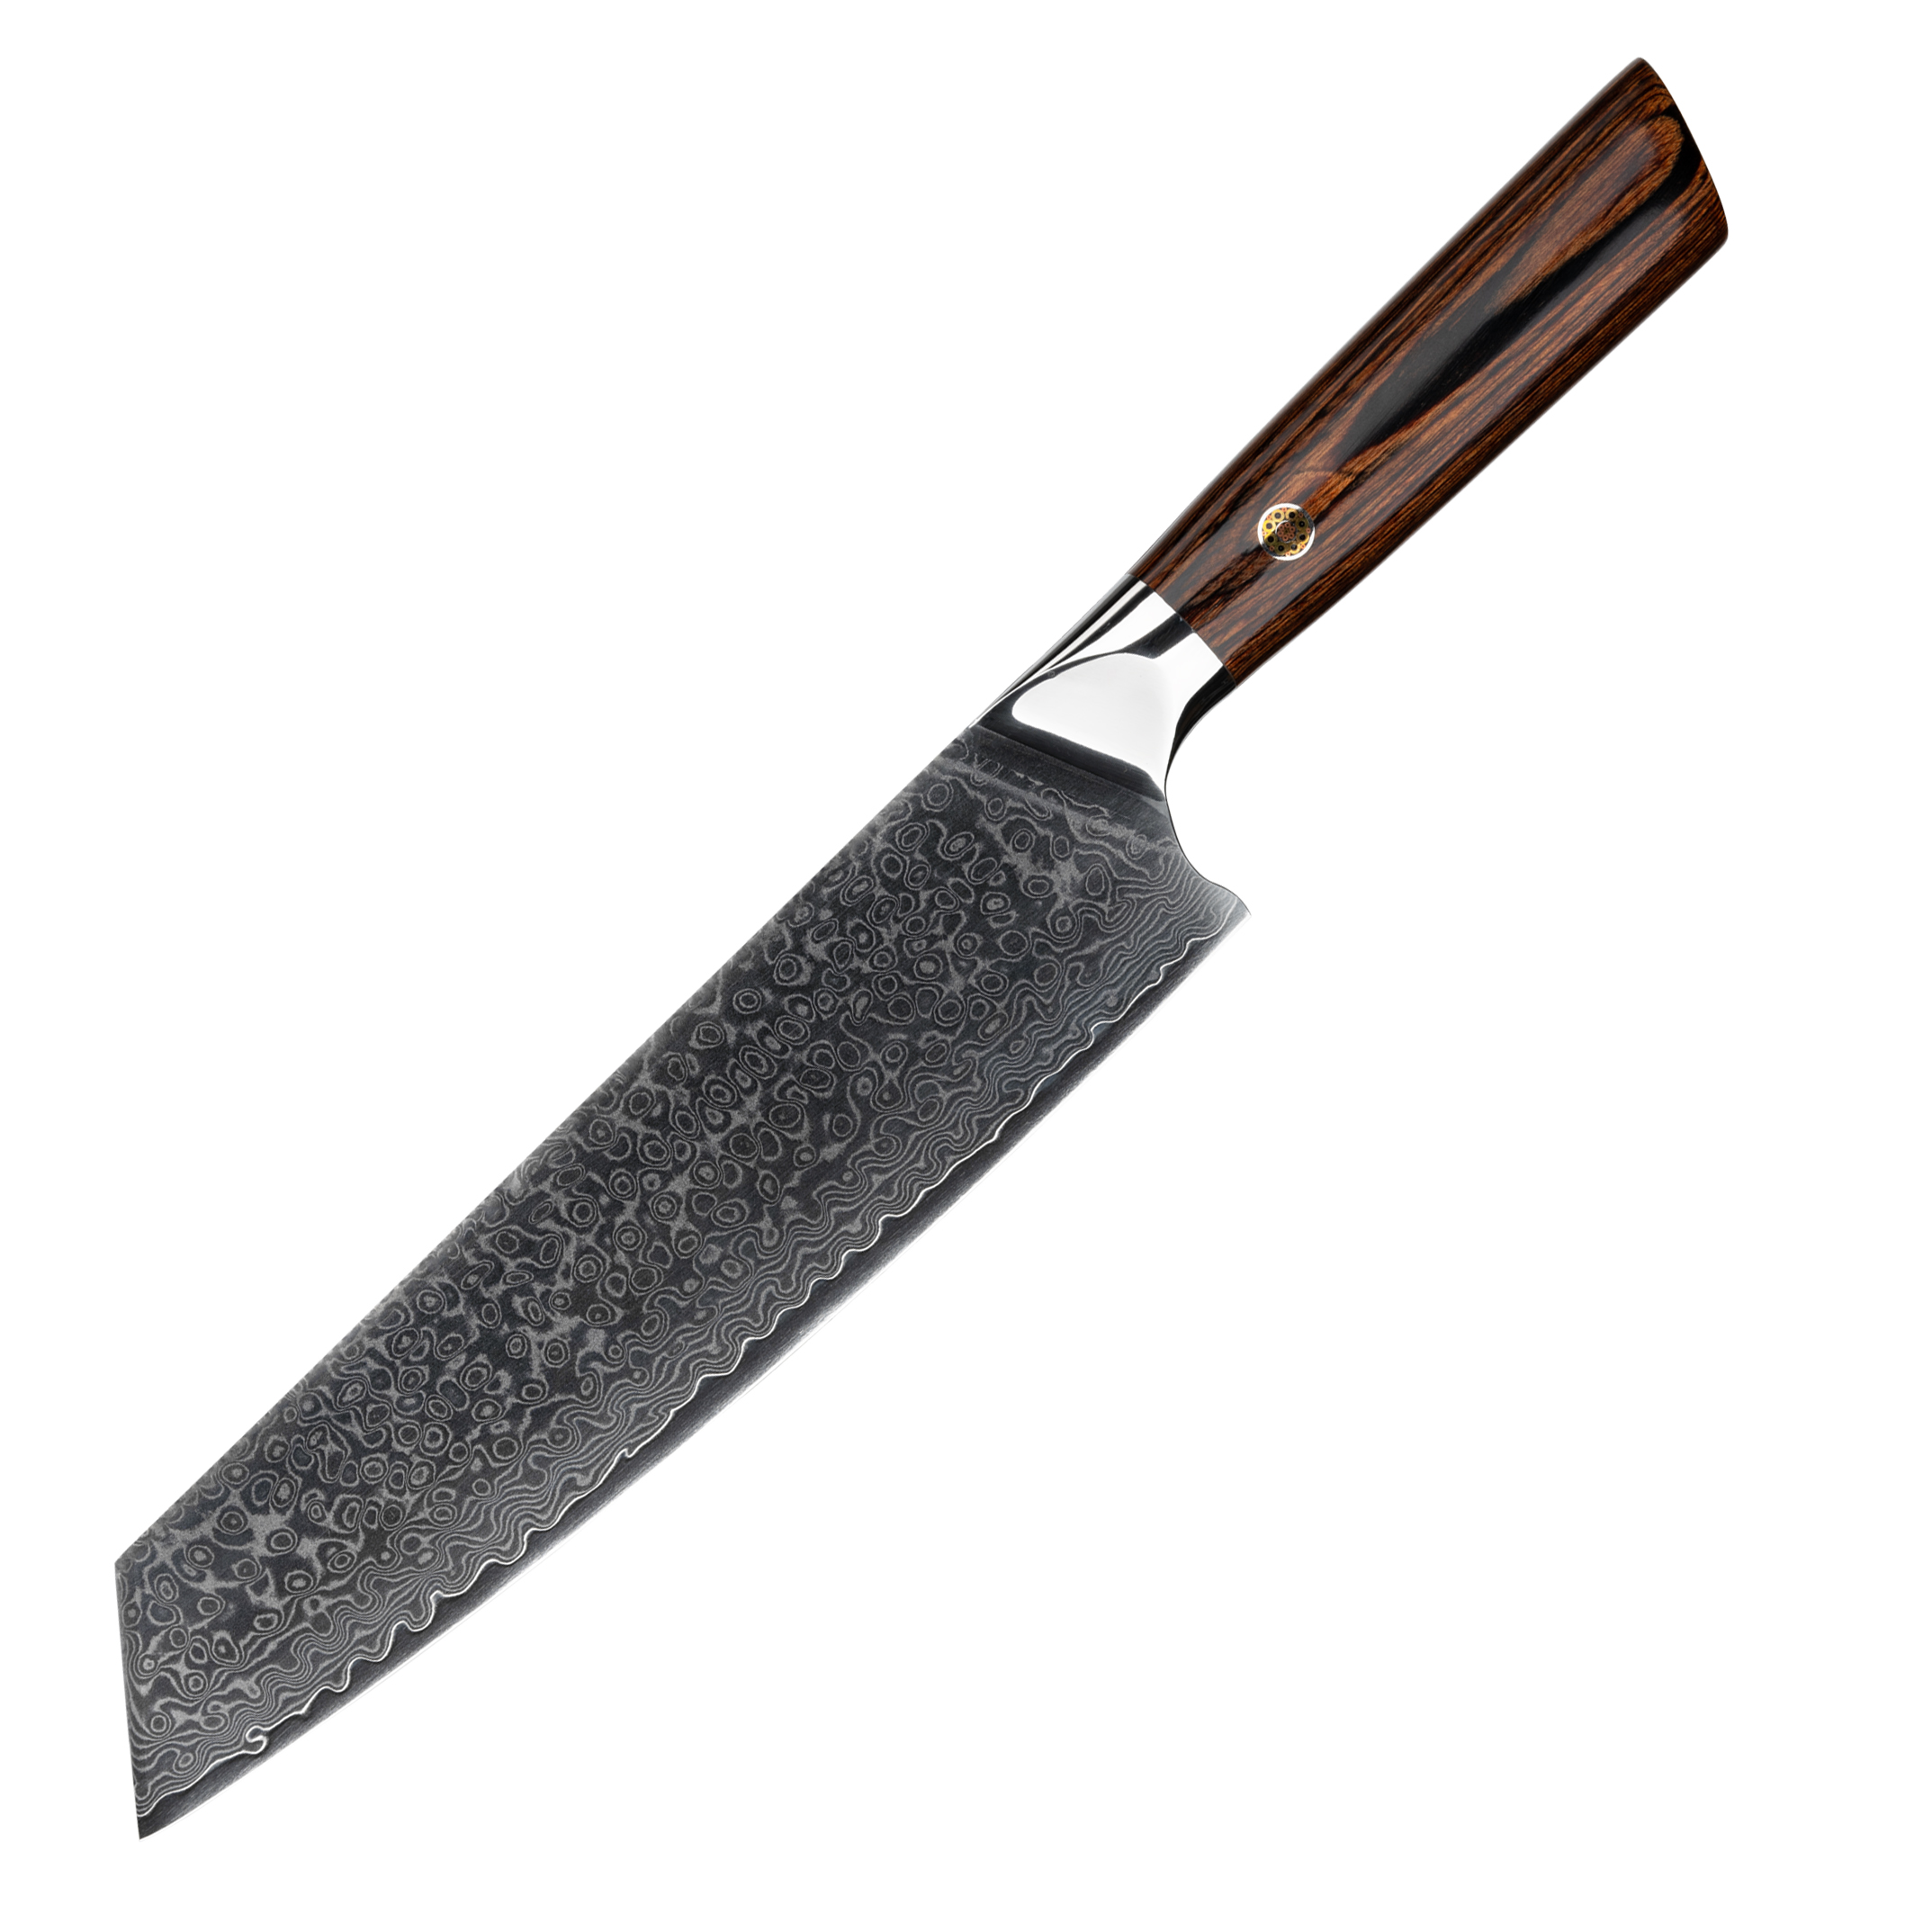 Jourmet 8-inch Kirisuke Knife displayed on a white background, emphasizing its sleek Damascus blade and elegant deep wood handle.